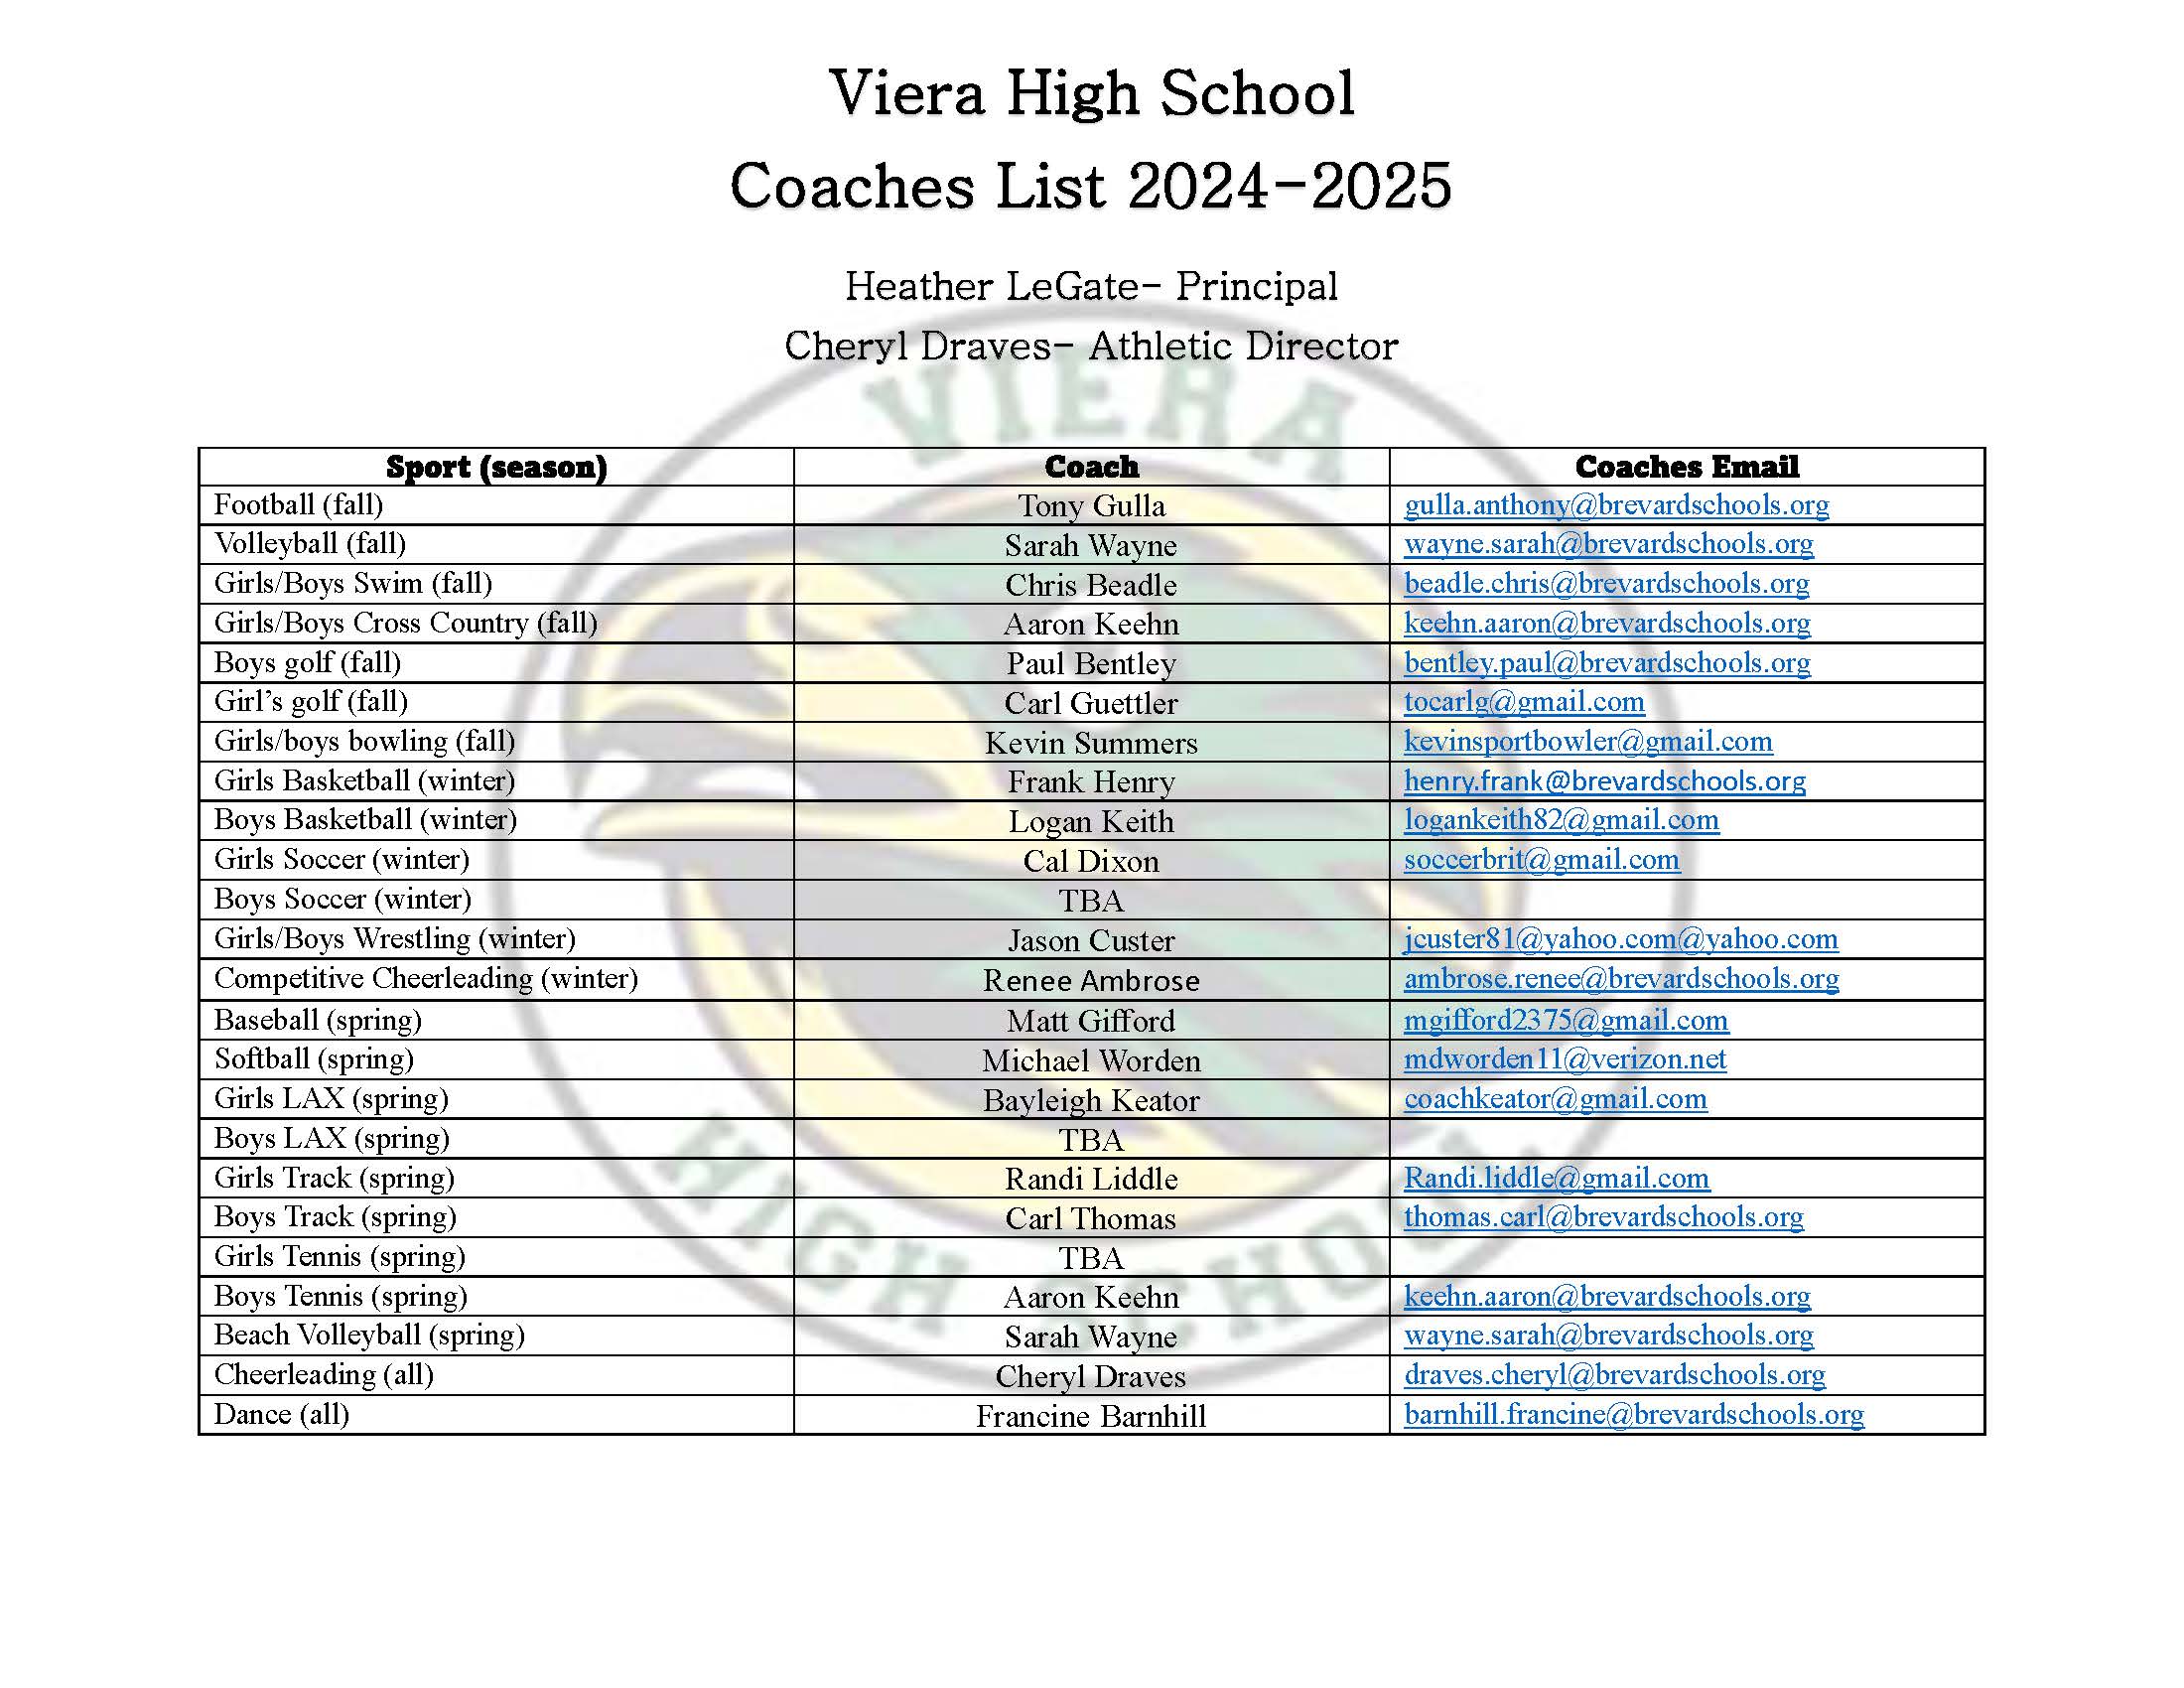 Viera High School Athletic Coaches